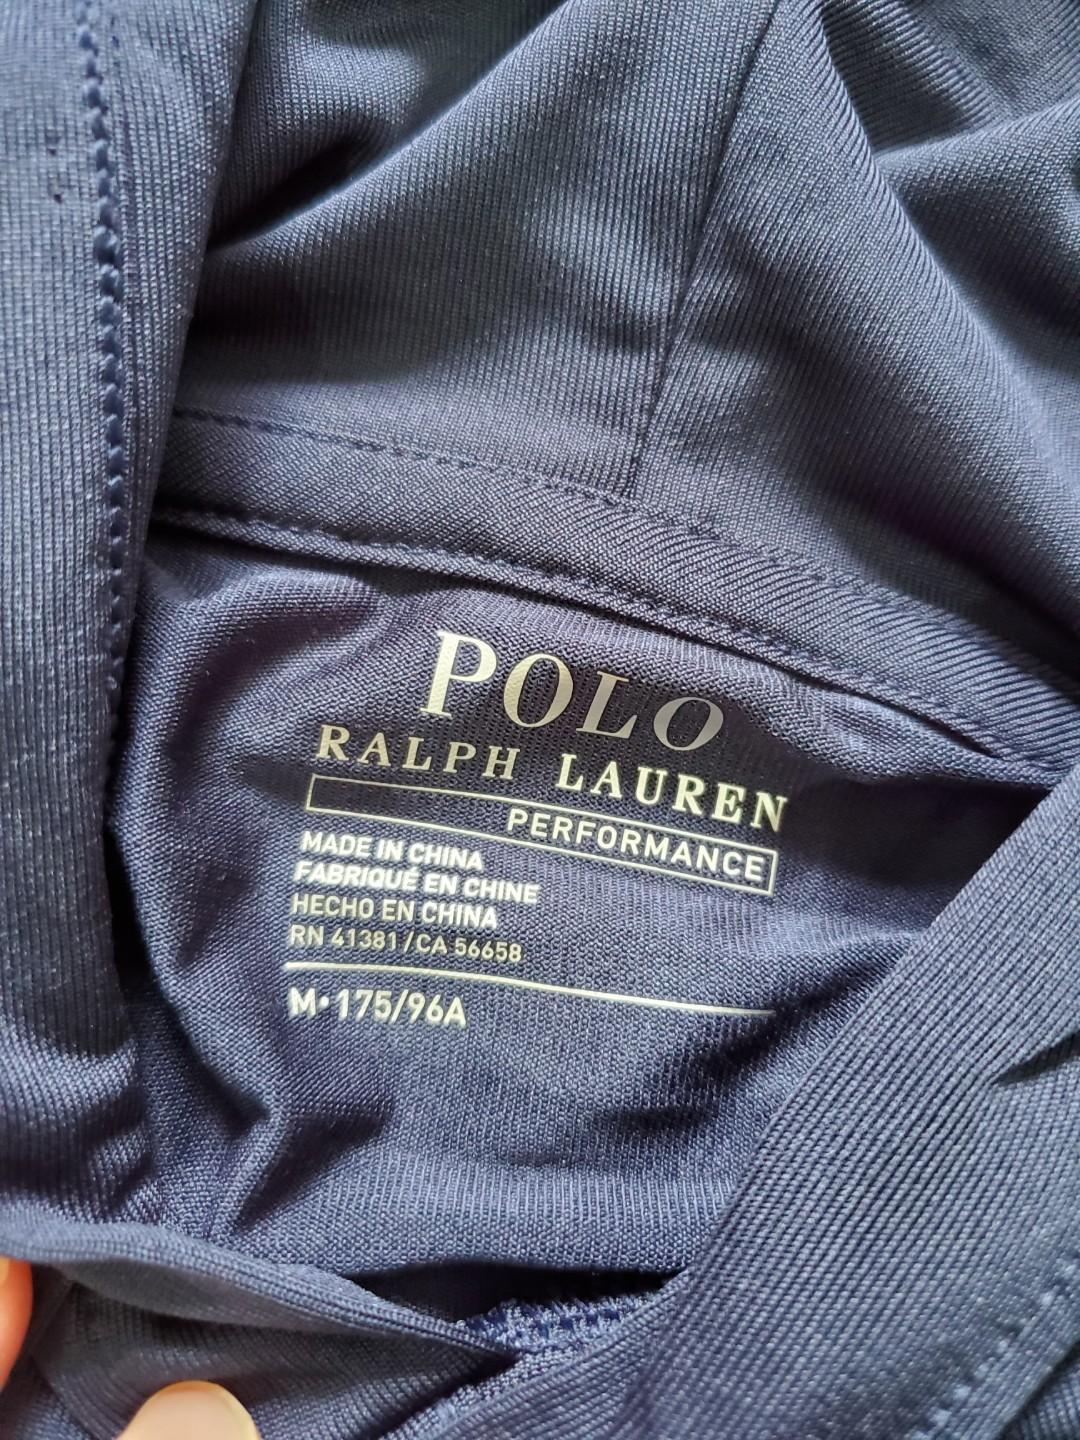 New authentic Polo Ralph Lauren men 